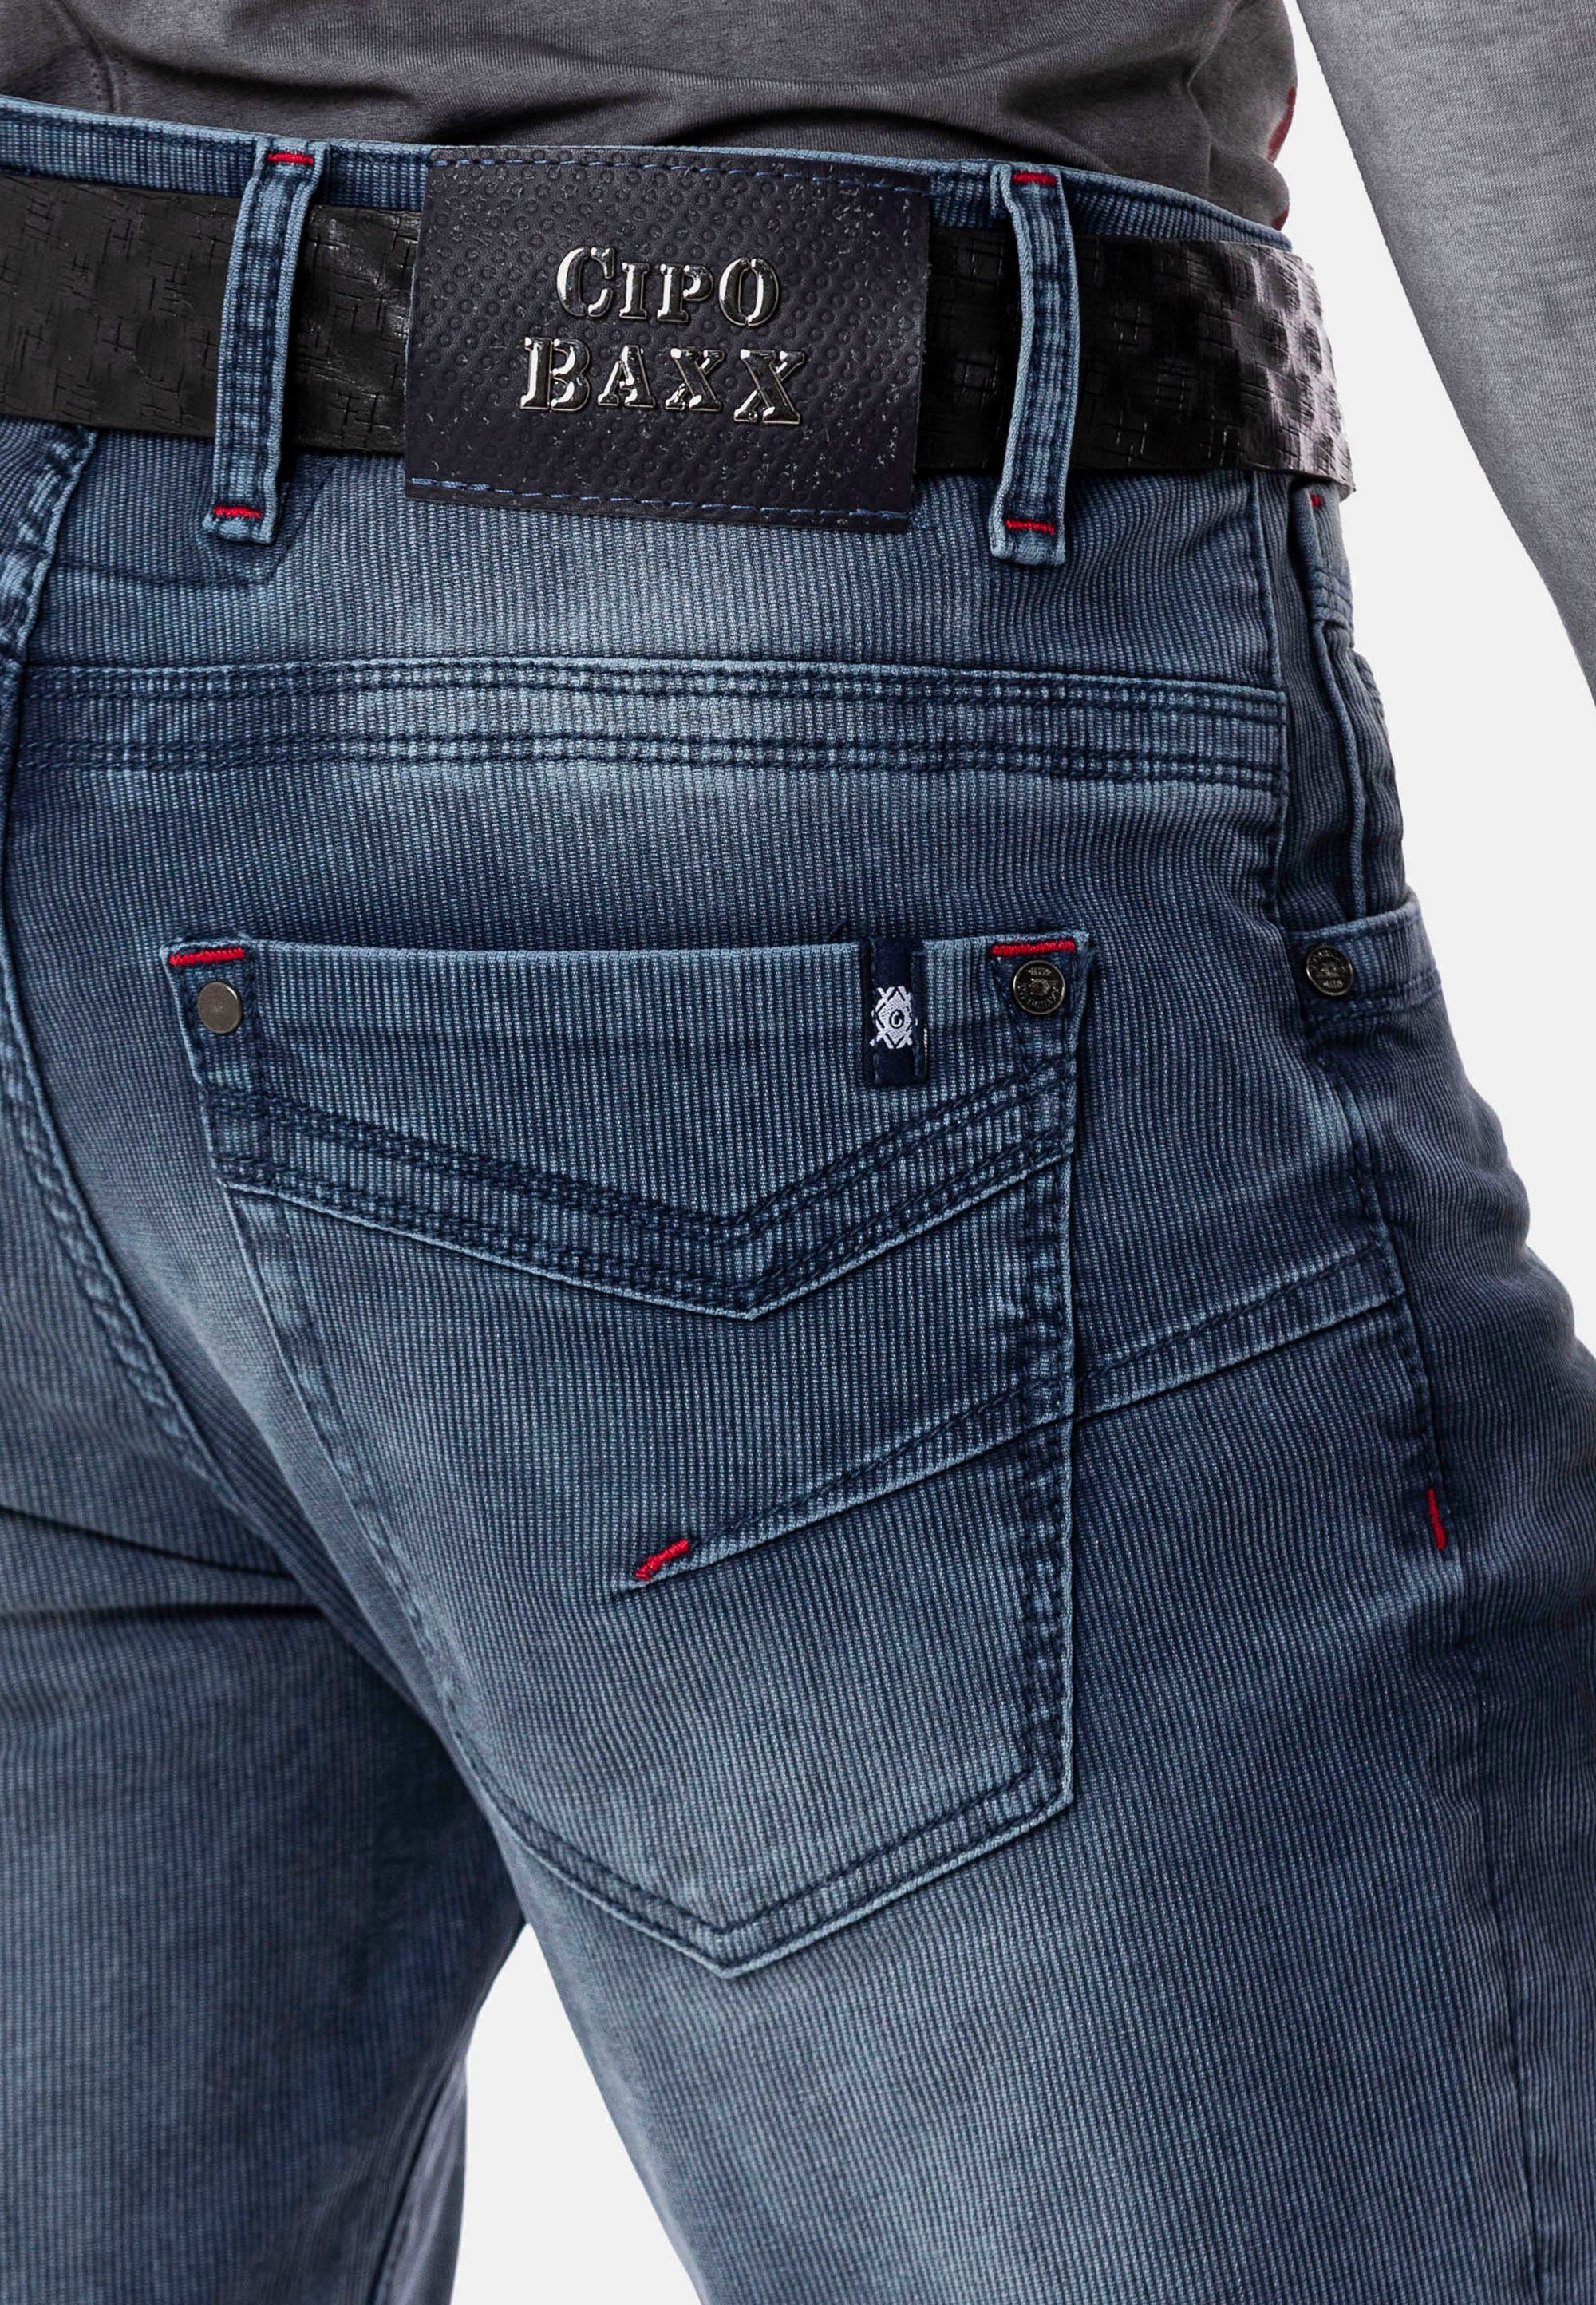 Cipo & Baxx blau stilvollem Straight-Jeans Cord-Design in